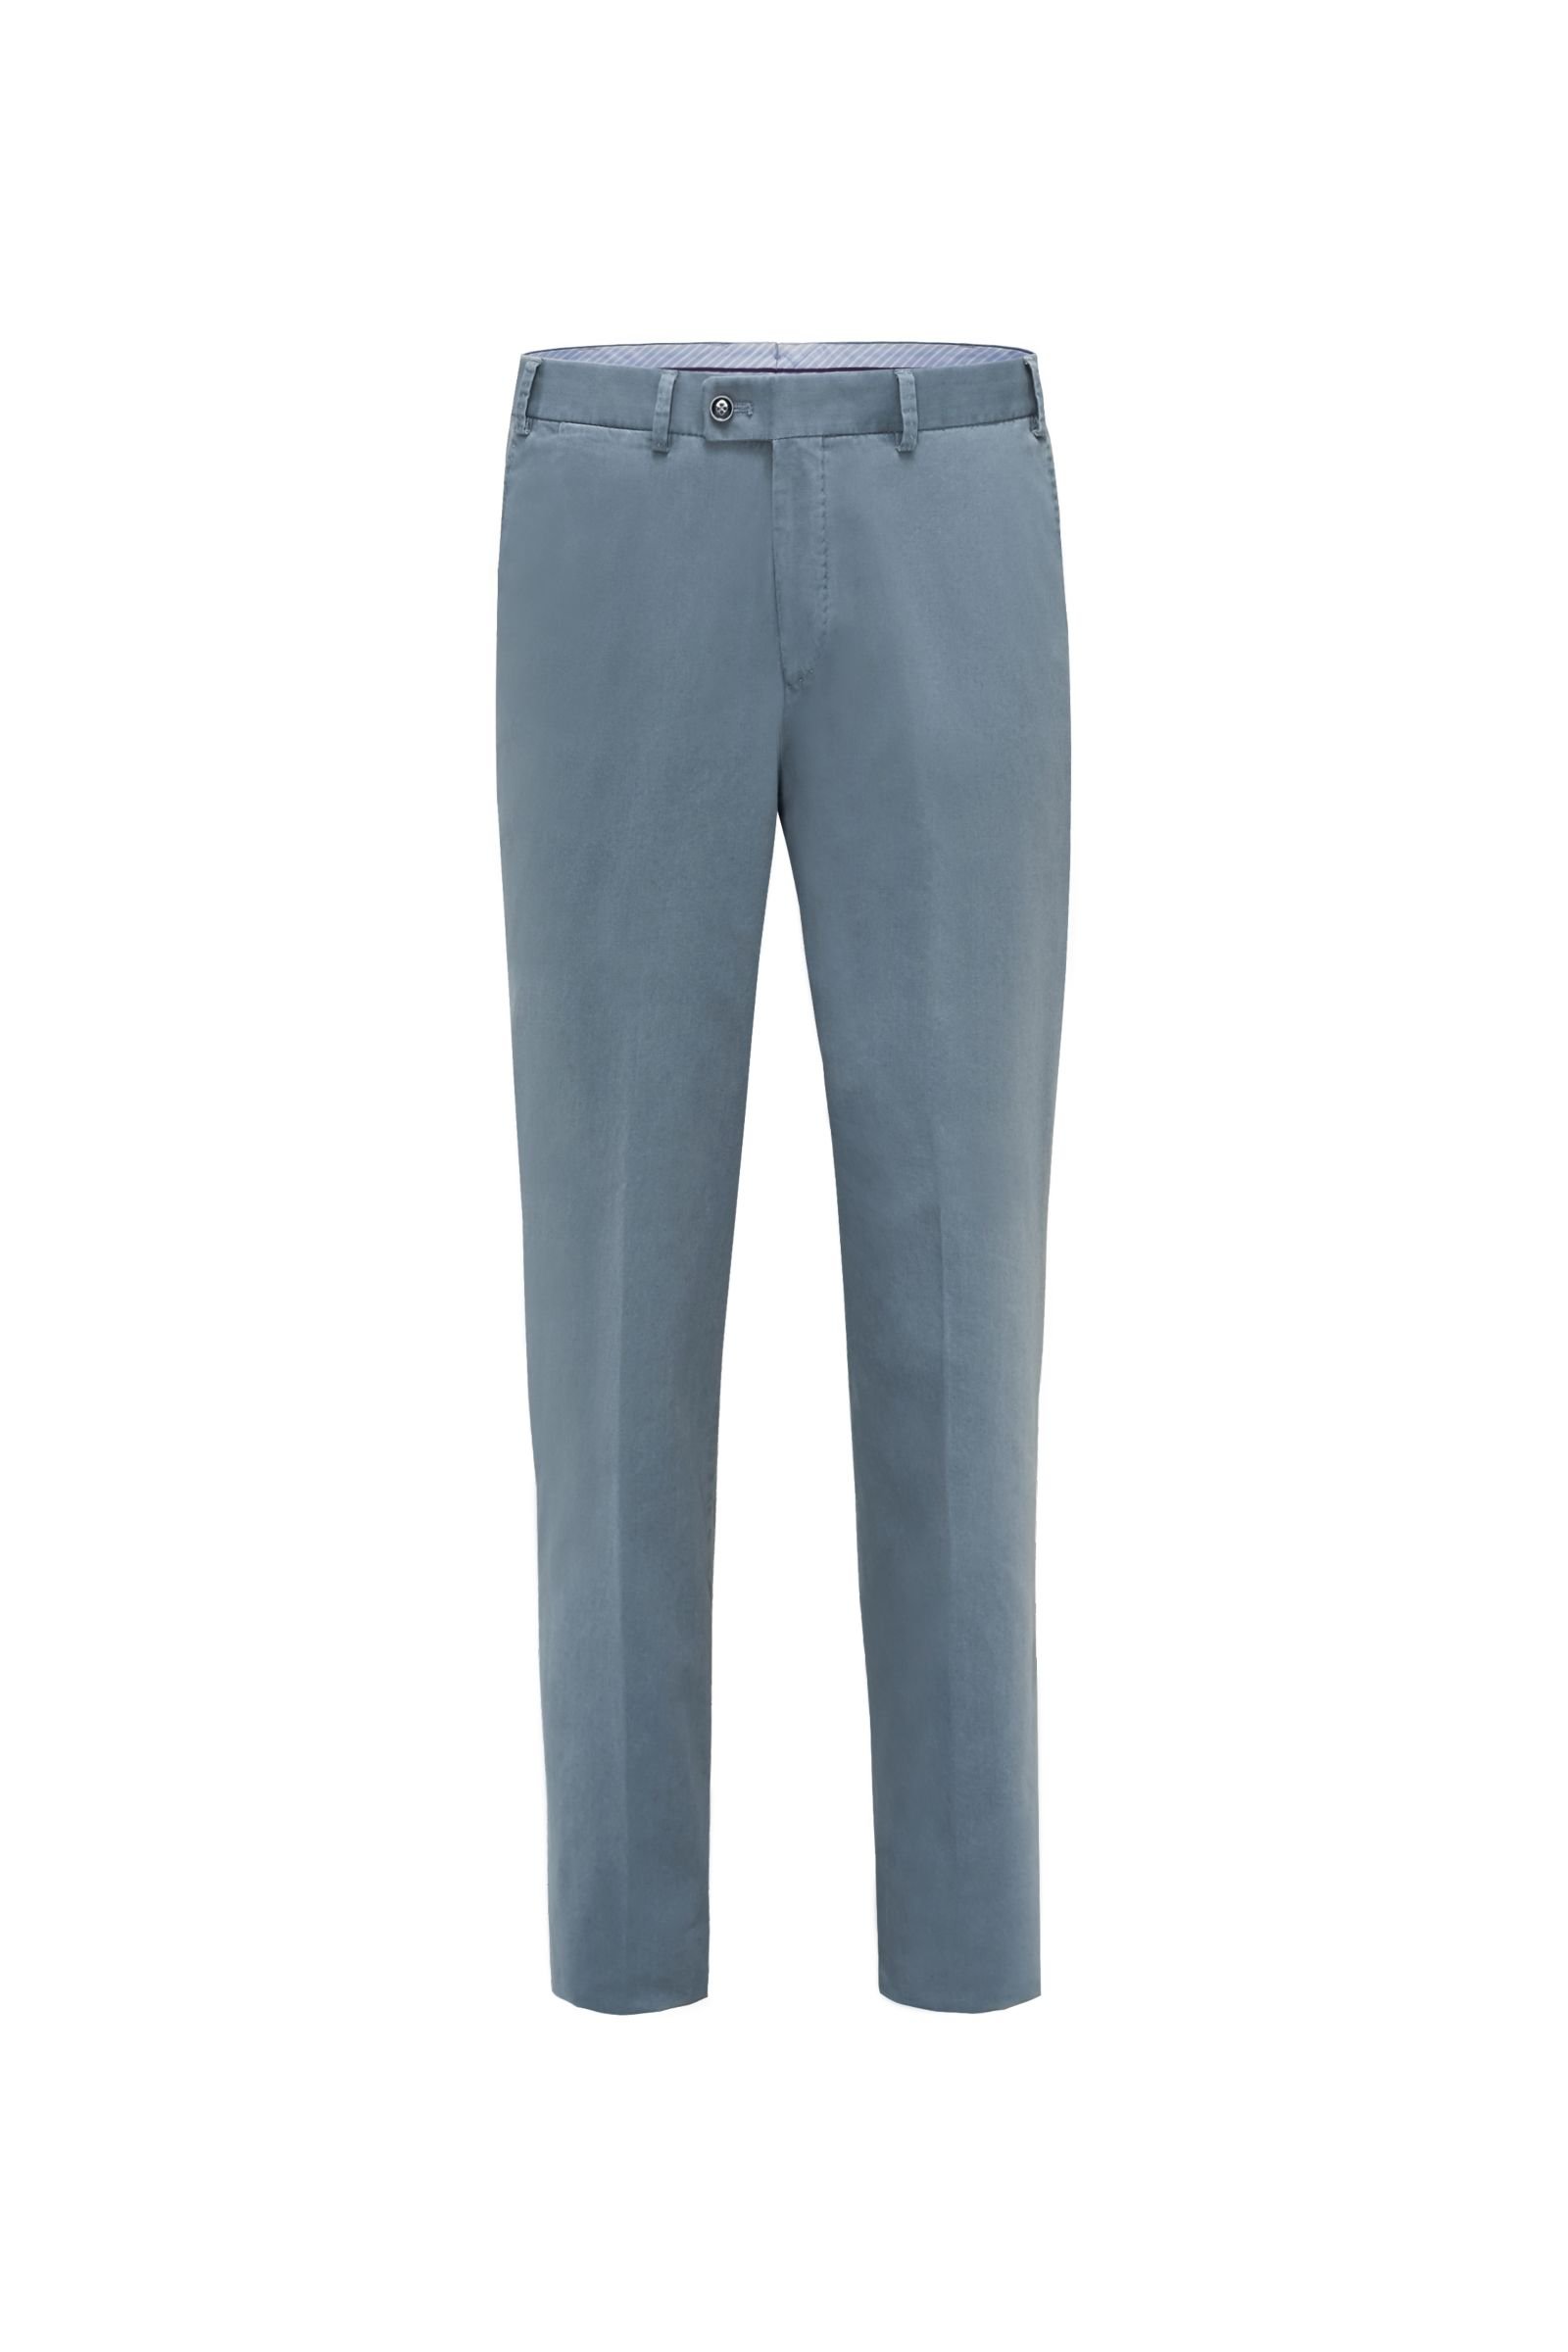 Cotton trousers 'Parma' smoky blue